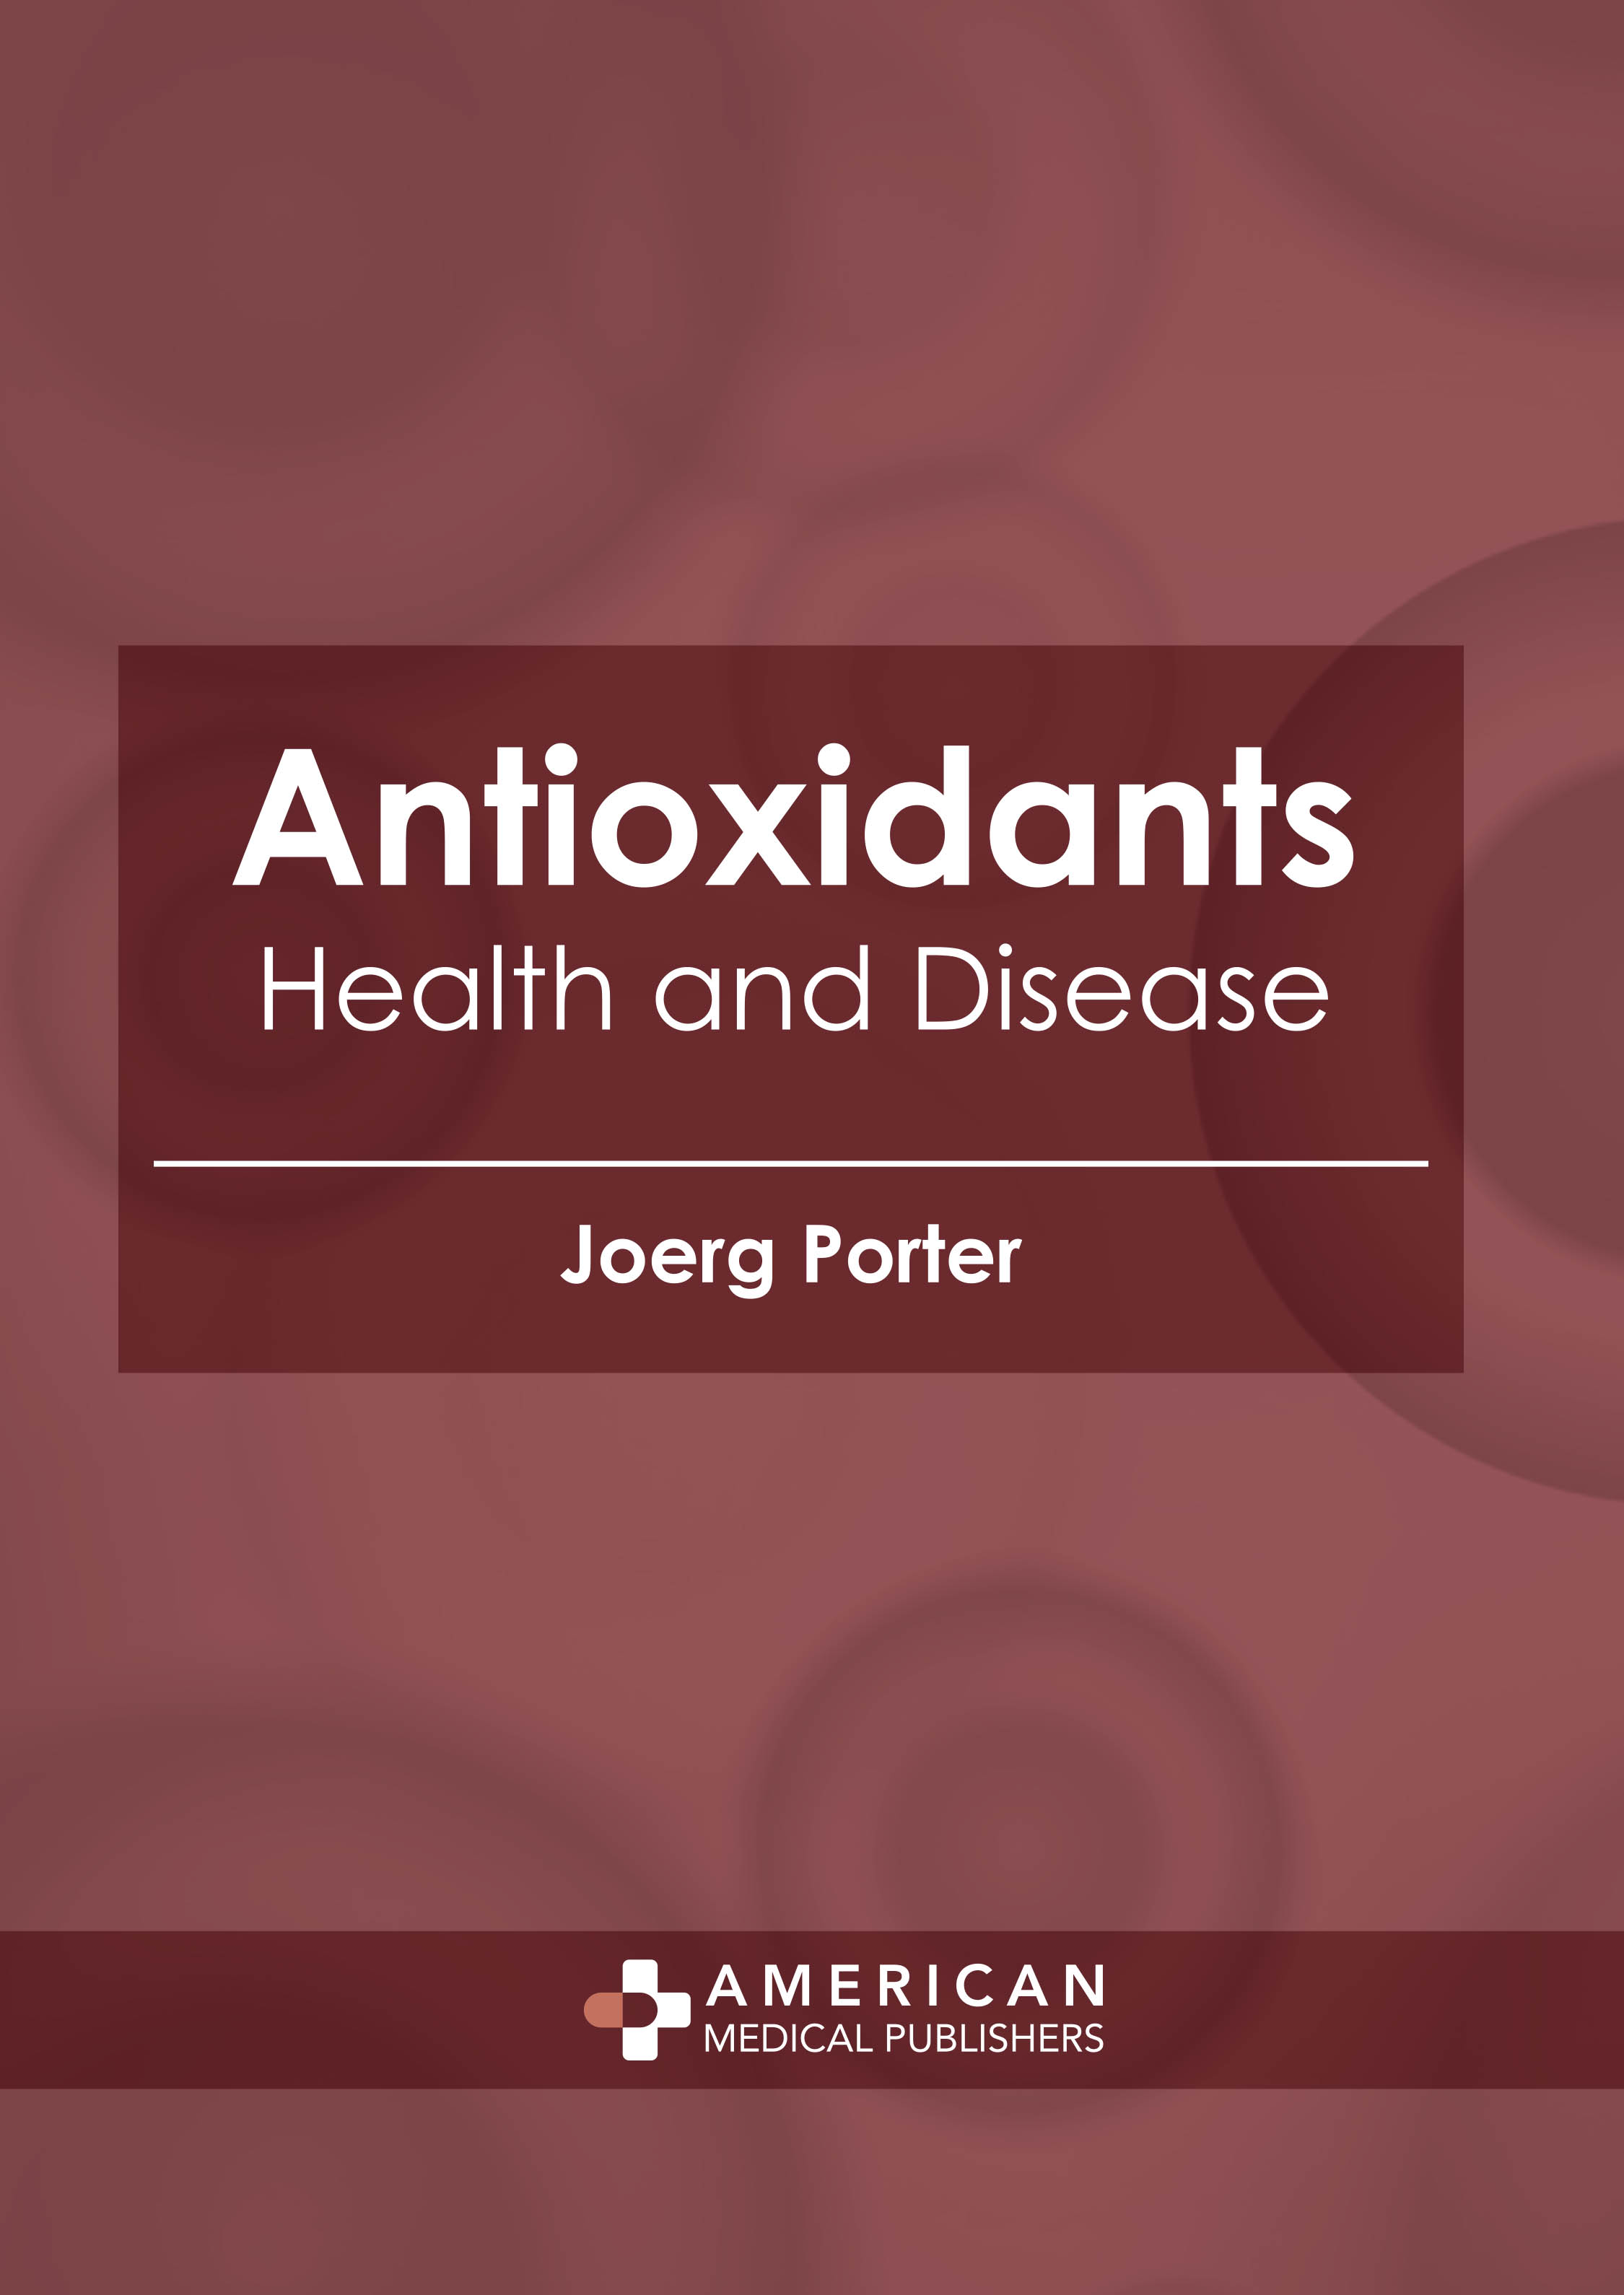 ANTIOXIDANTS: HEALTH AND DISEASE